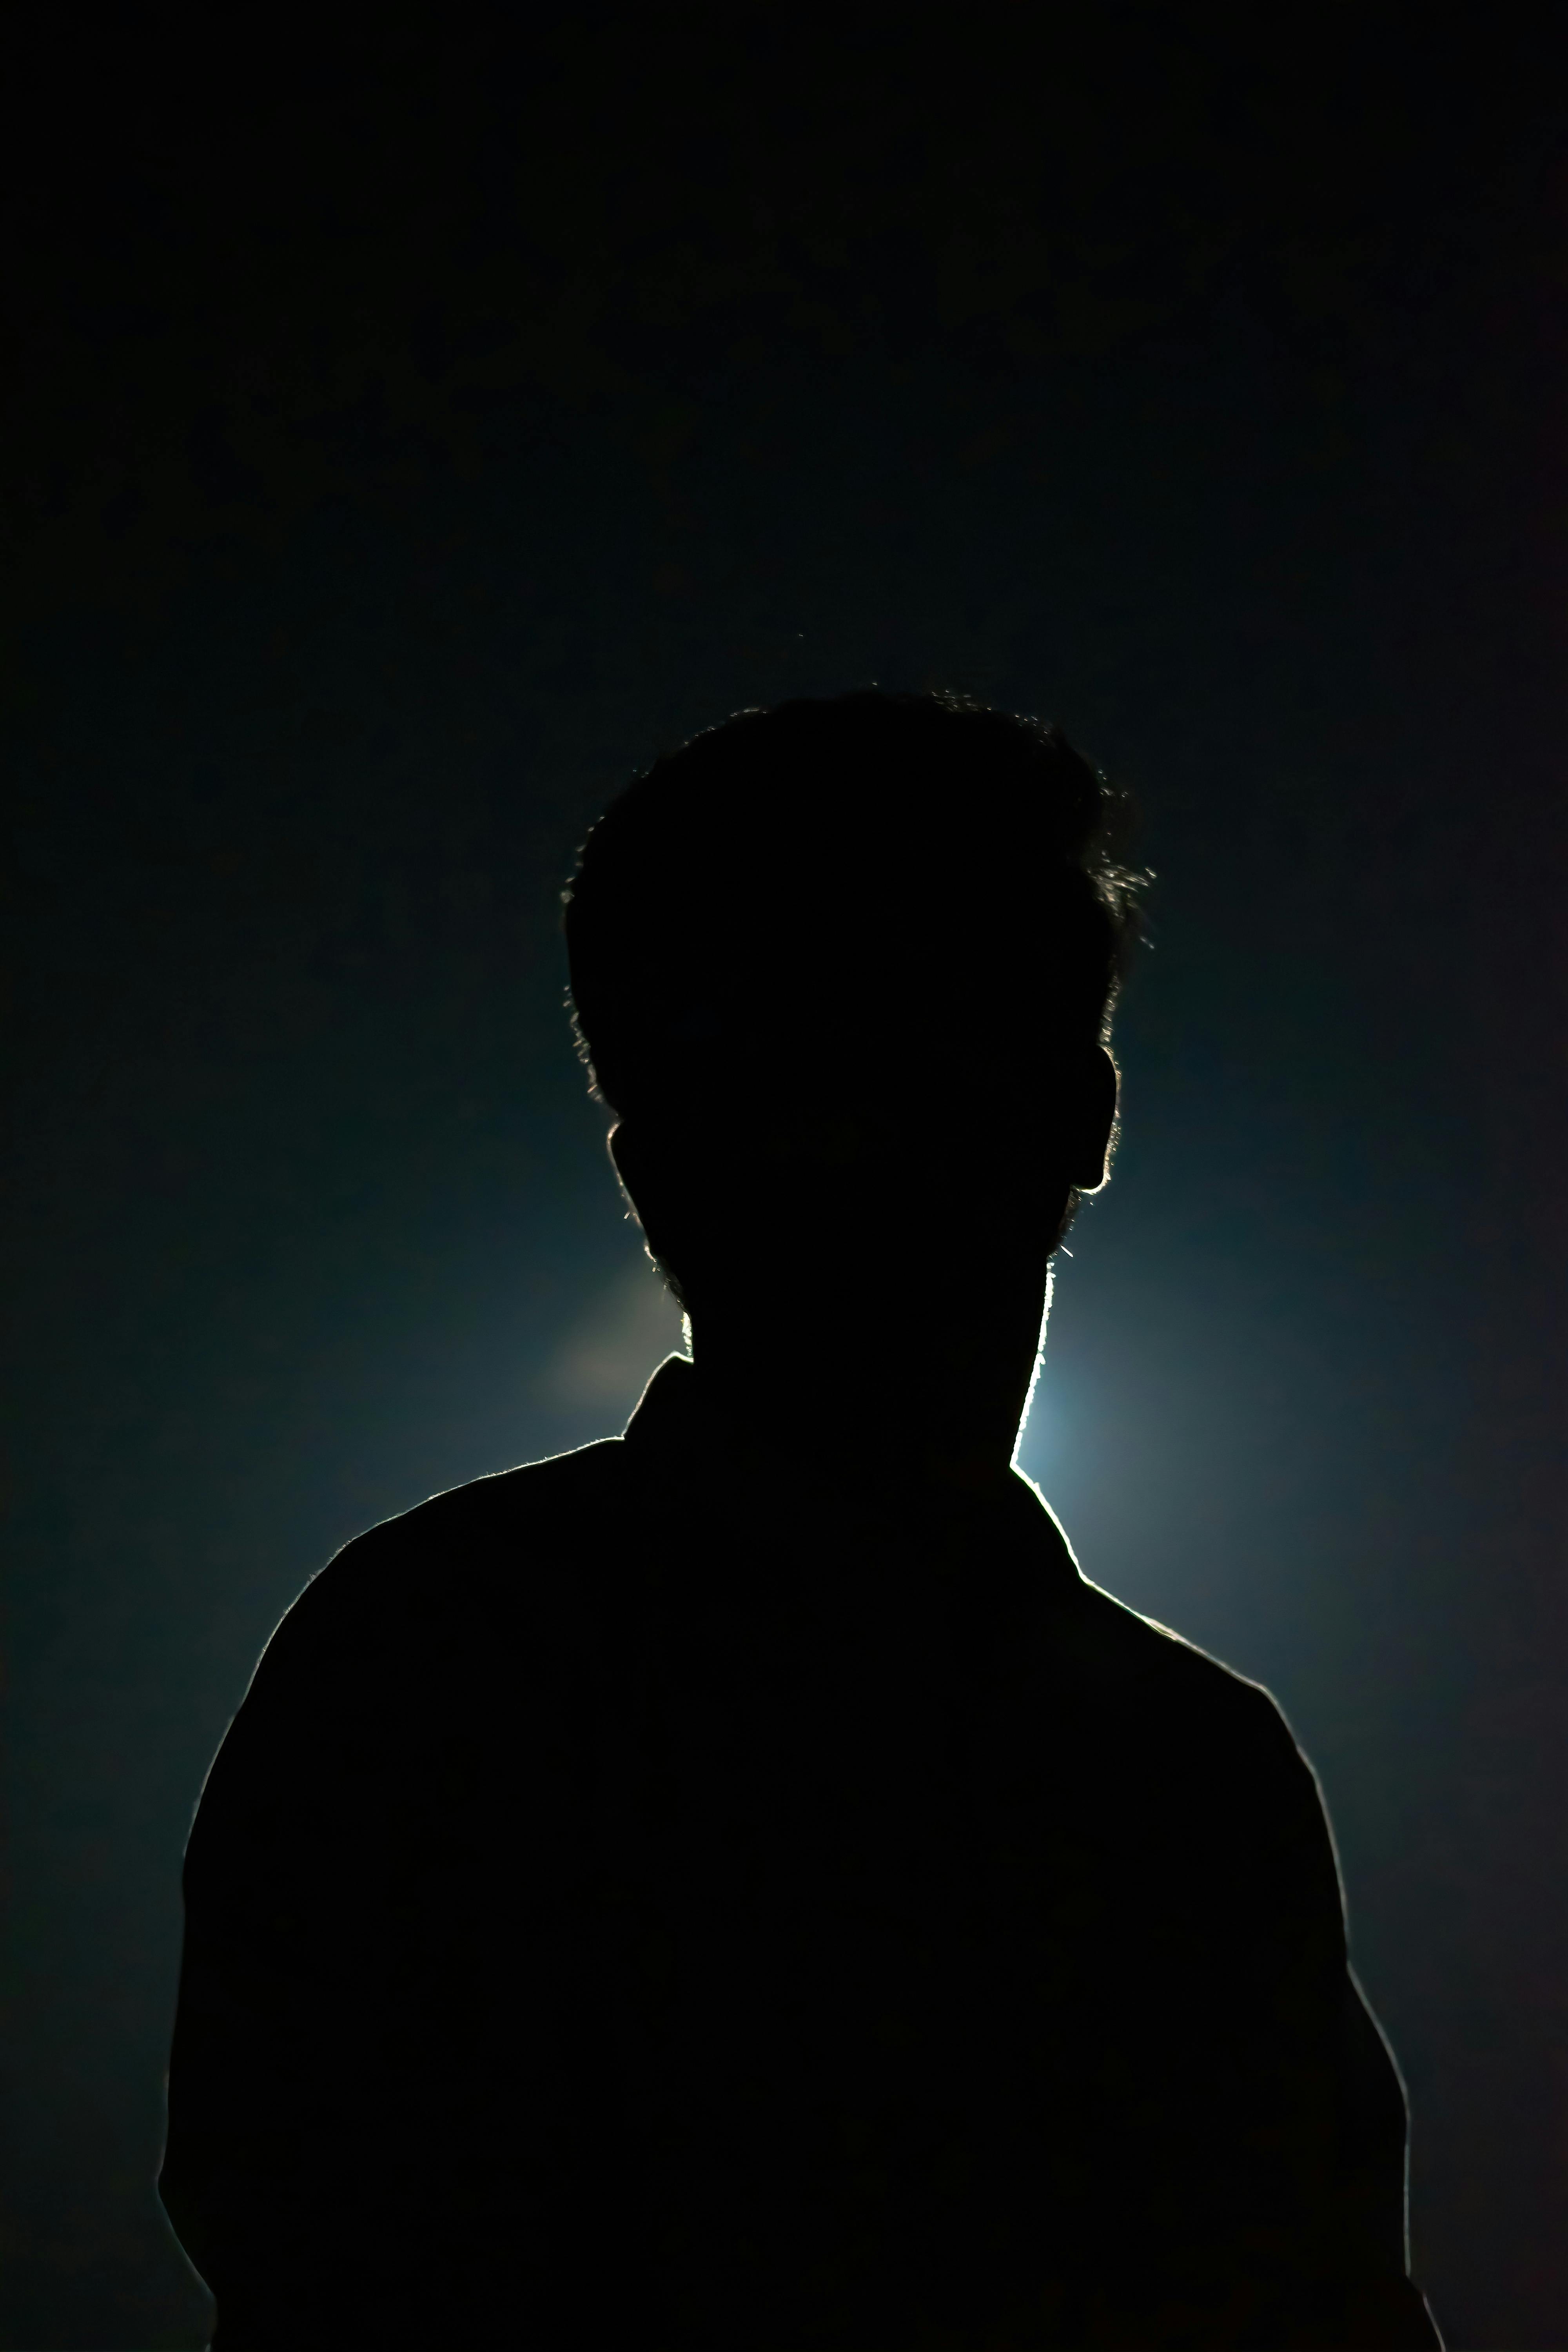 silhouette man standing profile